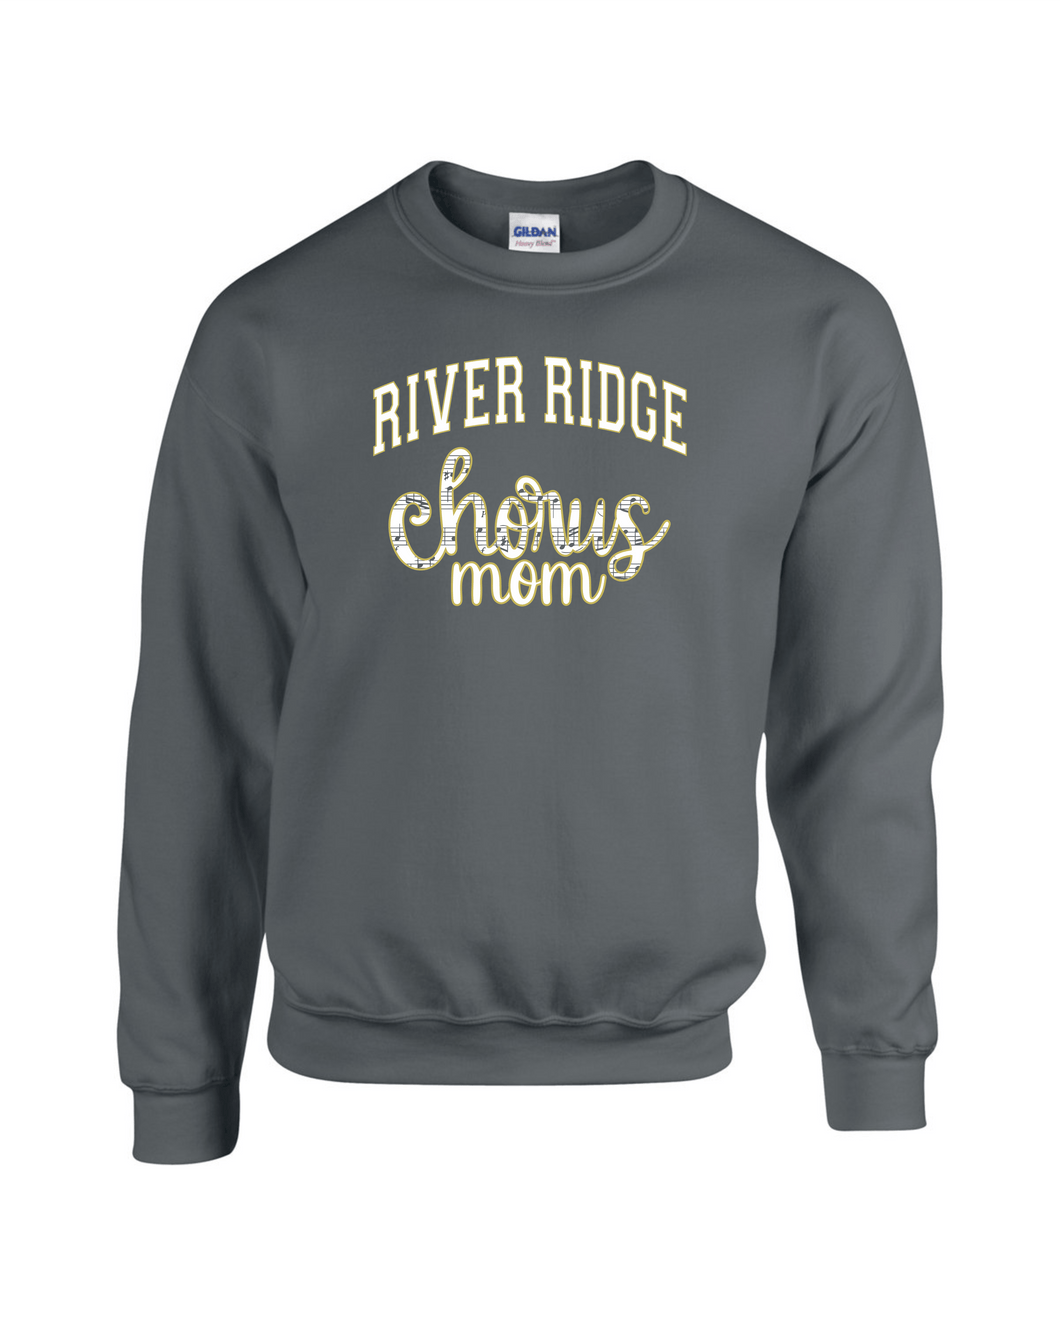 RR-CH-305-2 - Gildan Adult 8 oz., 50/50 Fleece Crew - River Ridge Chorus Mom Logo